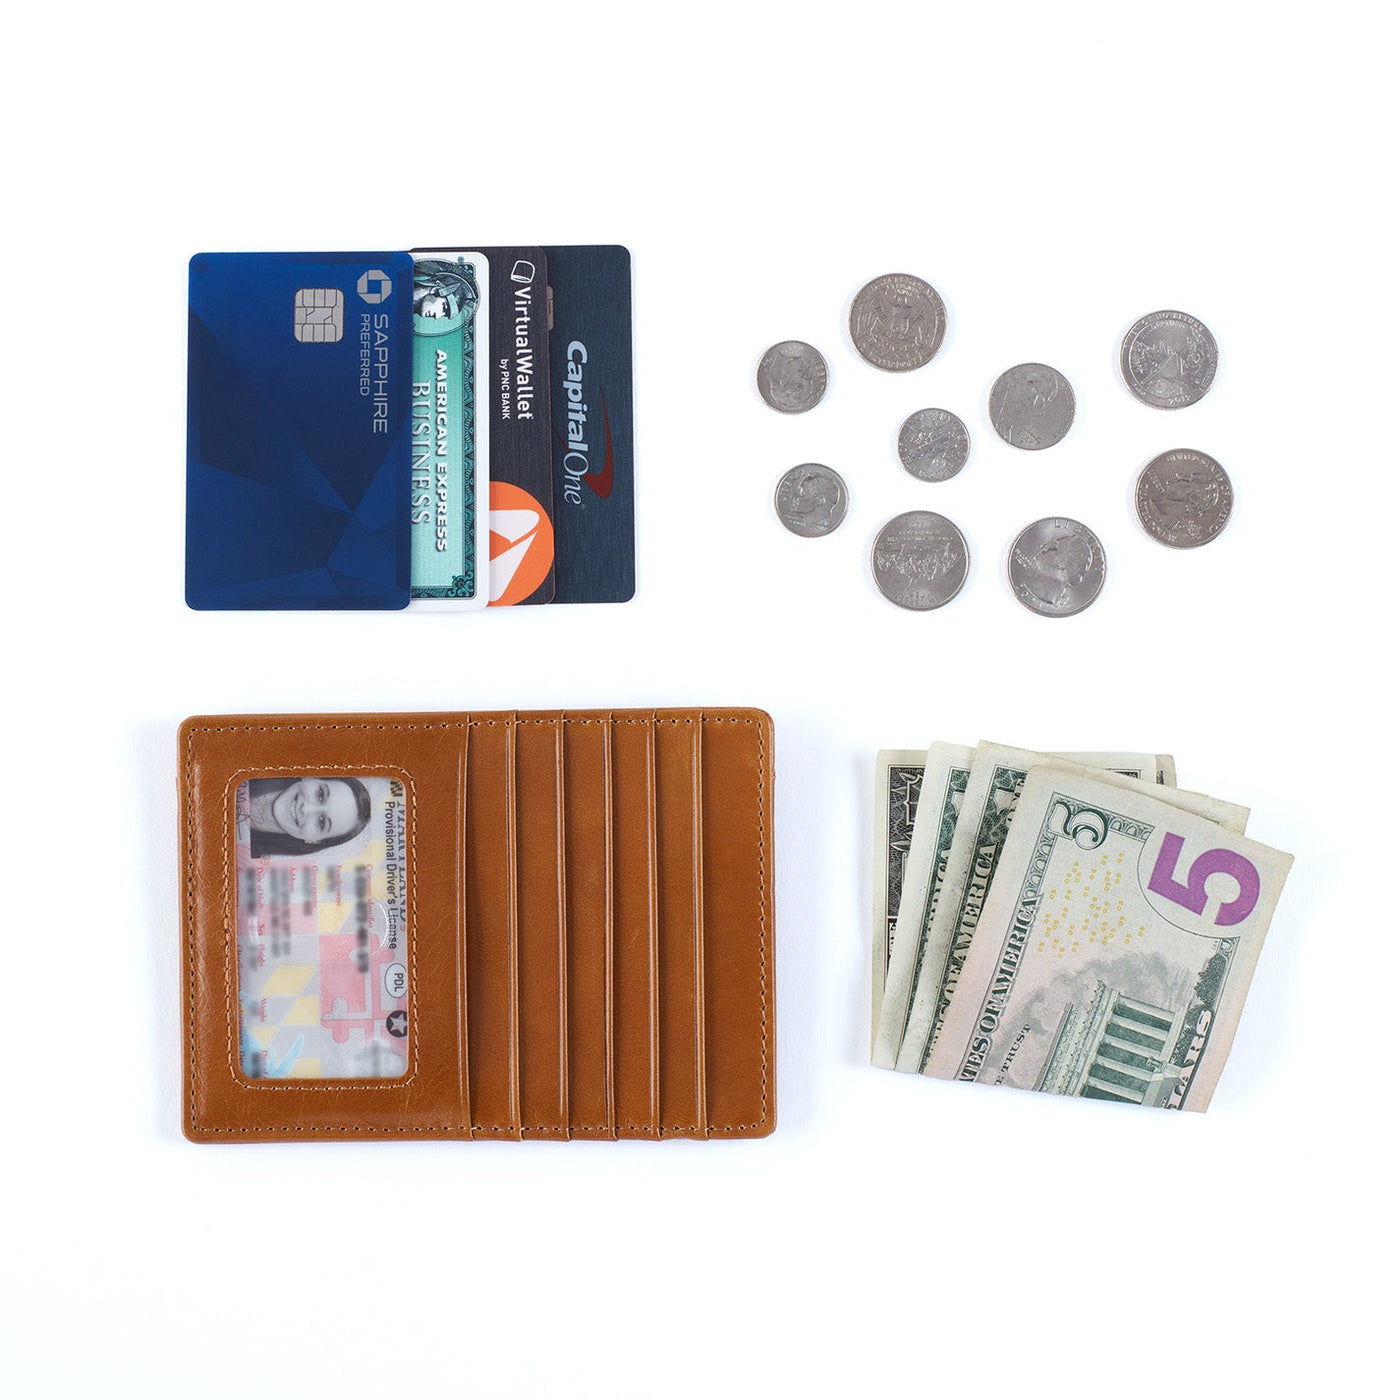 Euro Slide Card Case in Metallic Leather - Silver